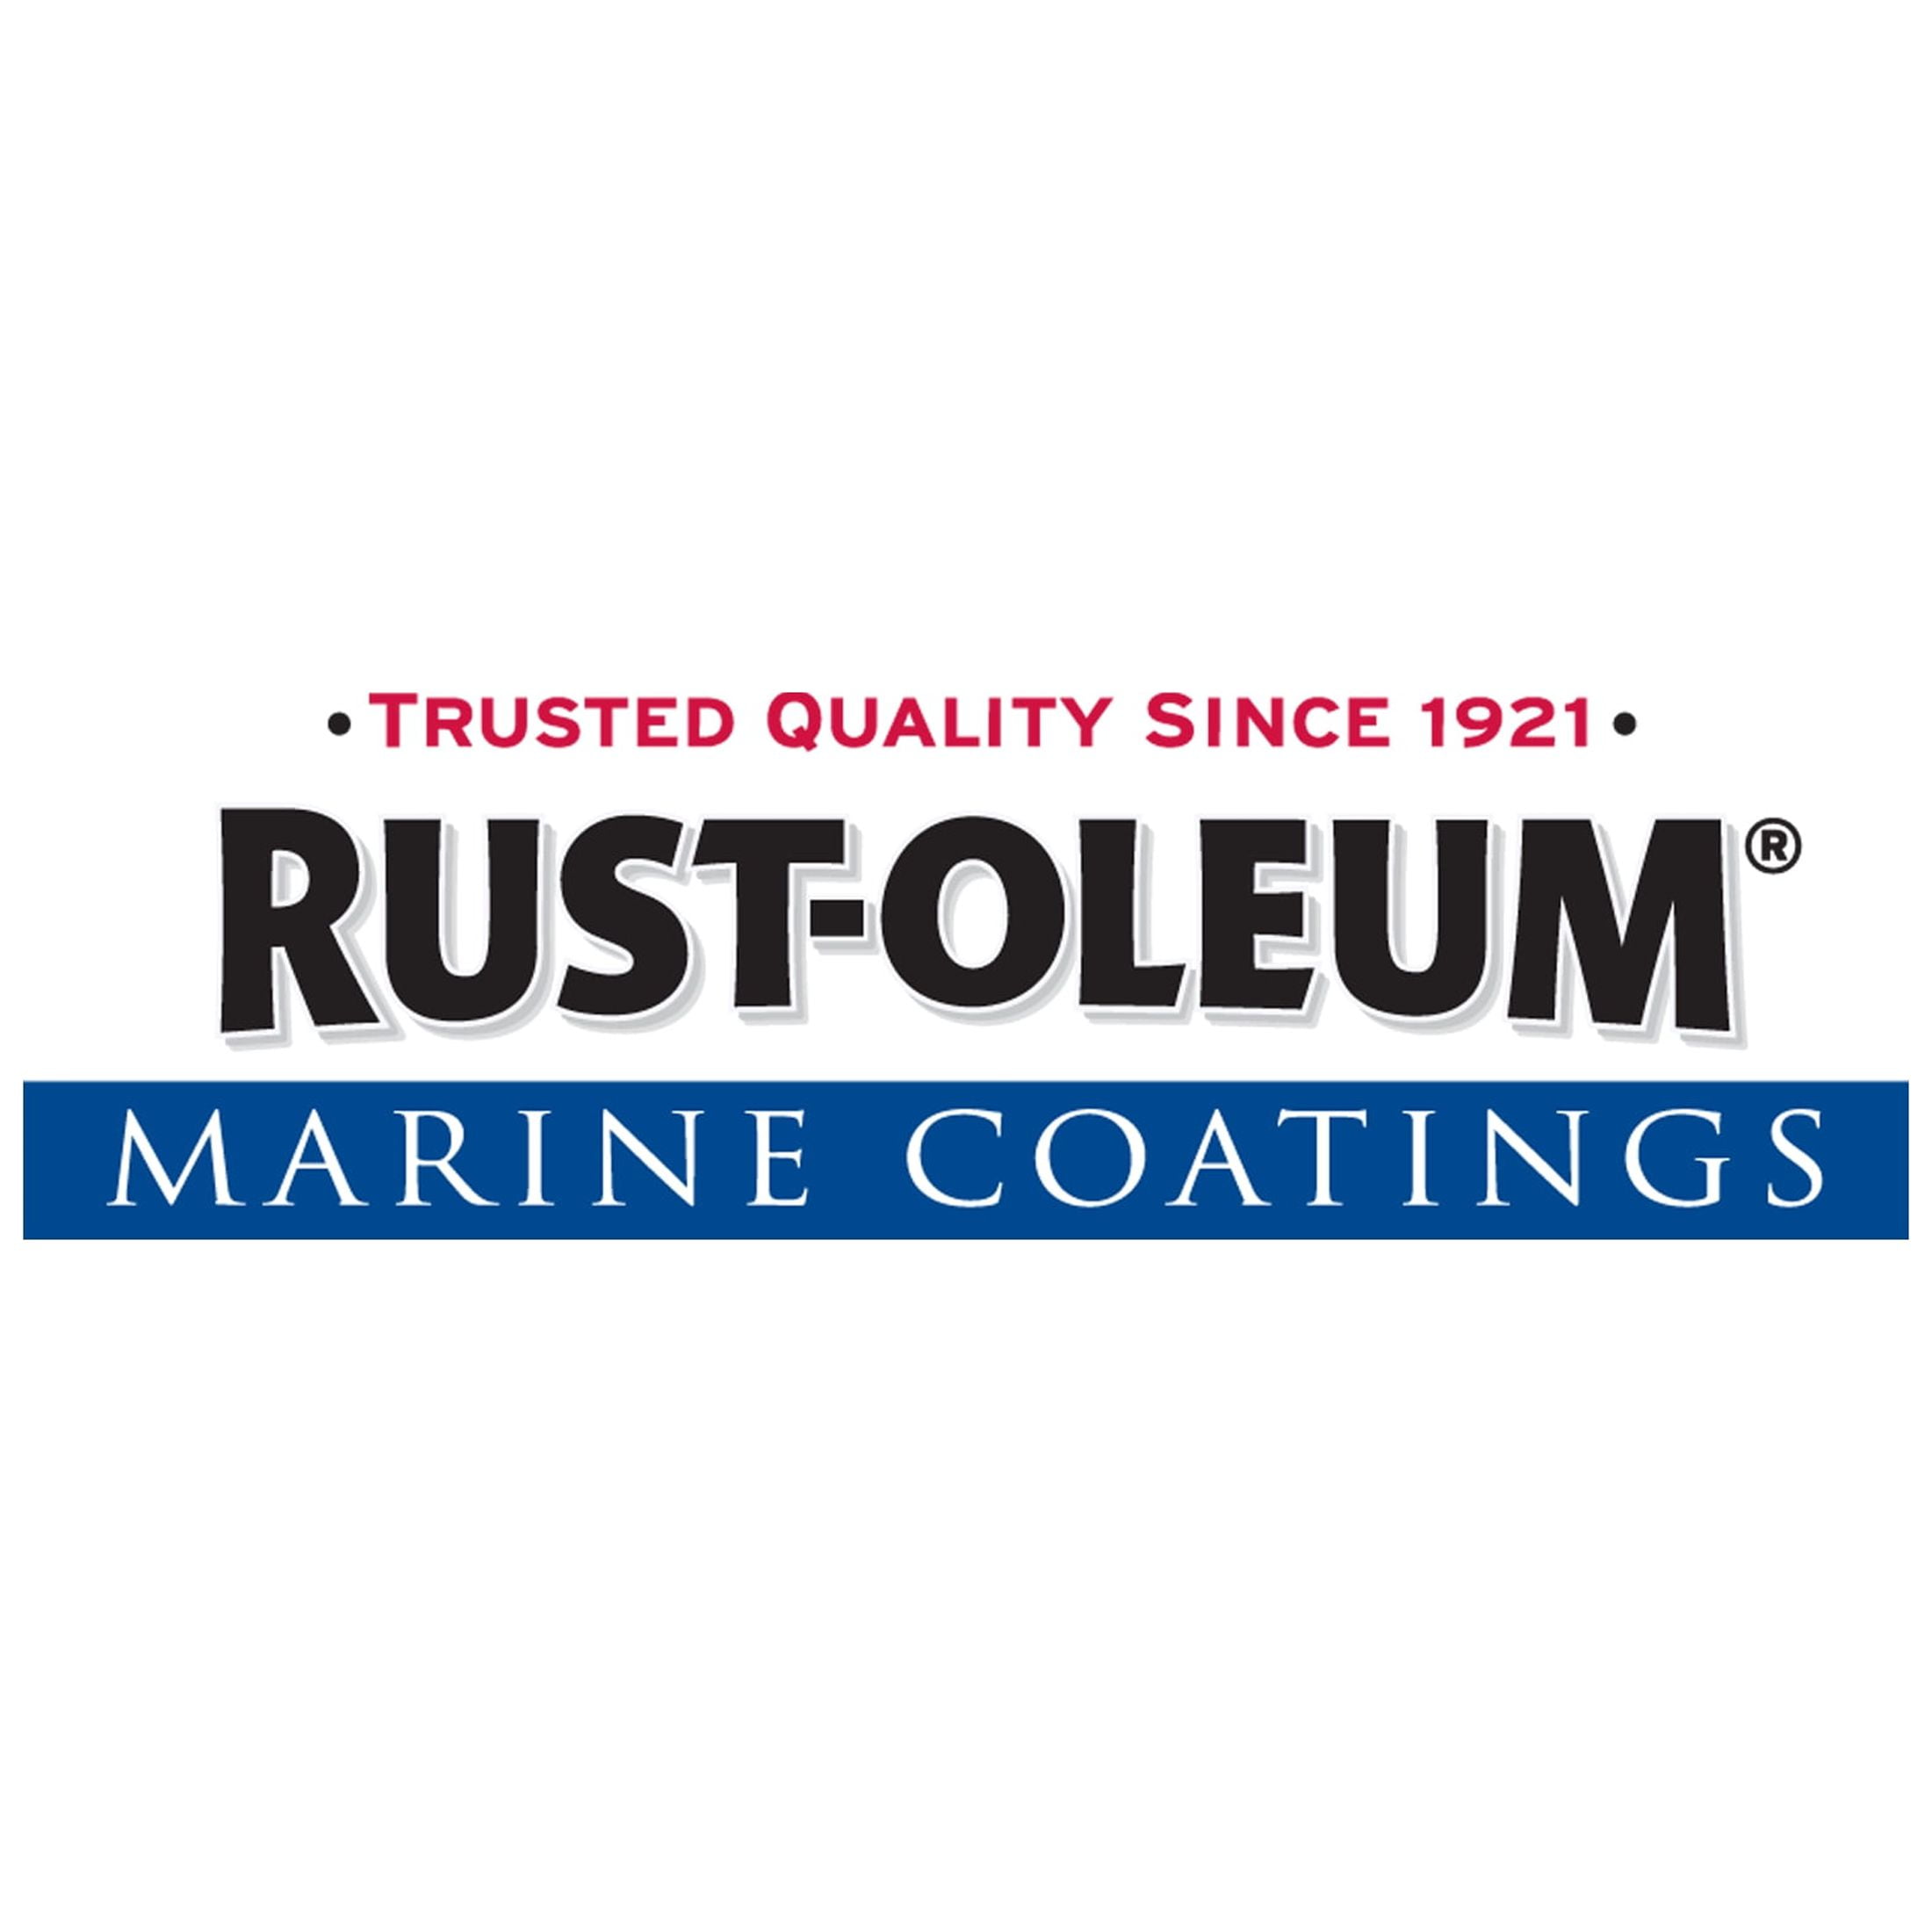 Rust-Oleum Marine Coatings Spar Varnish Gloss Clear Oil-based Marine Varnish  (1-quart) in the Marine Paint department at